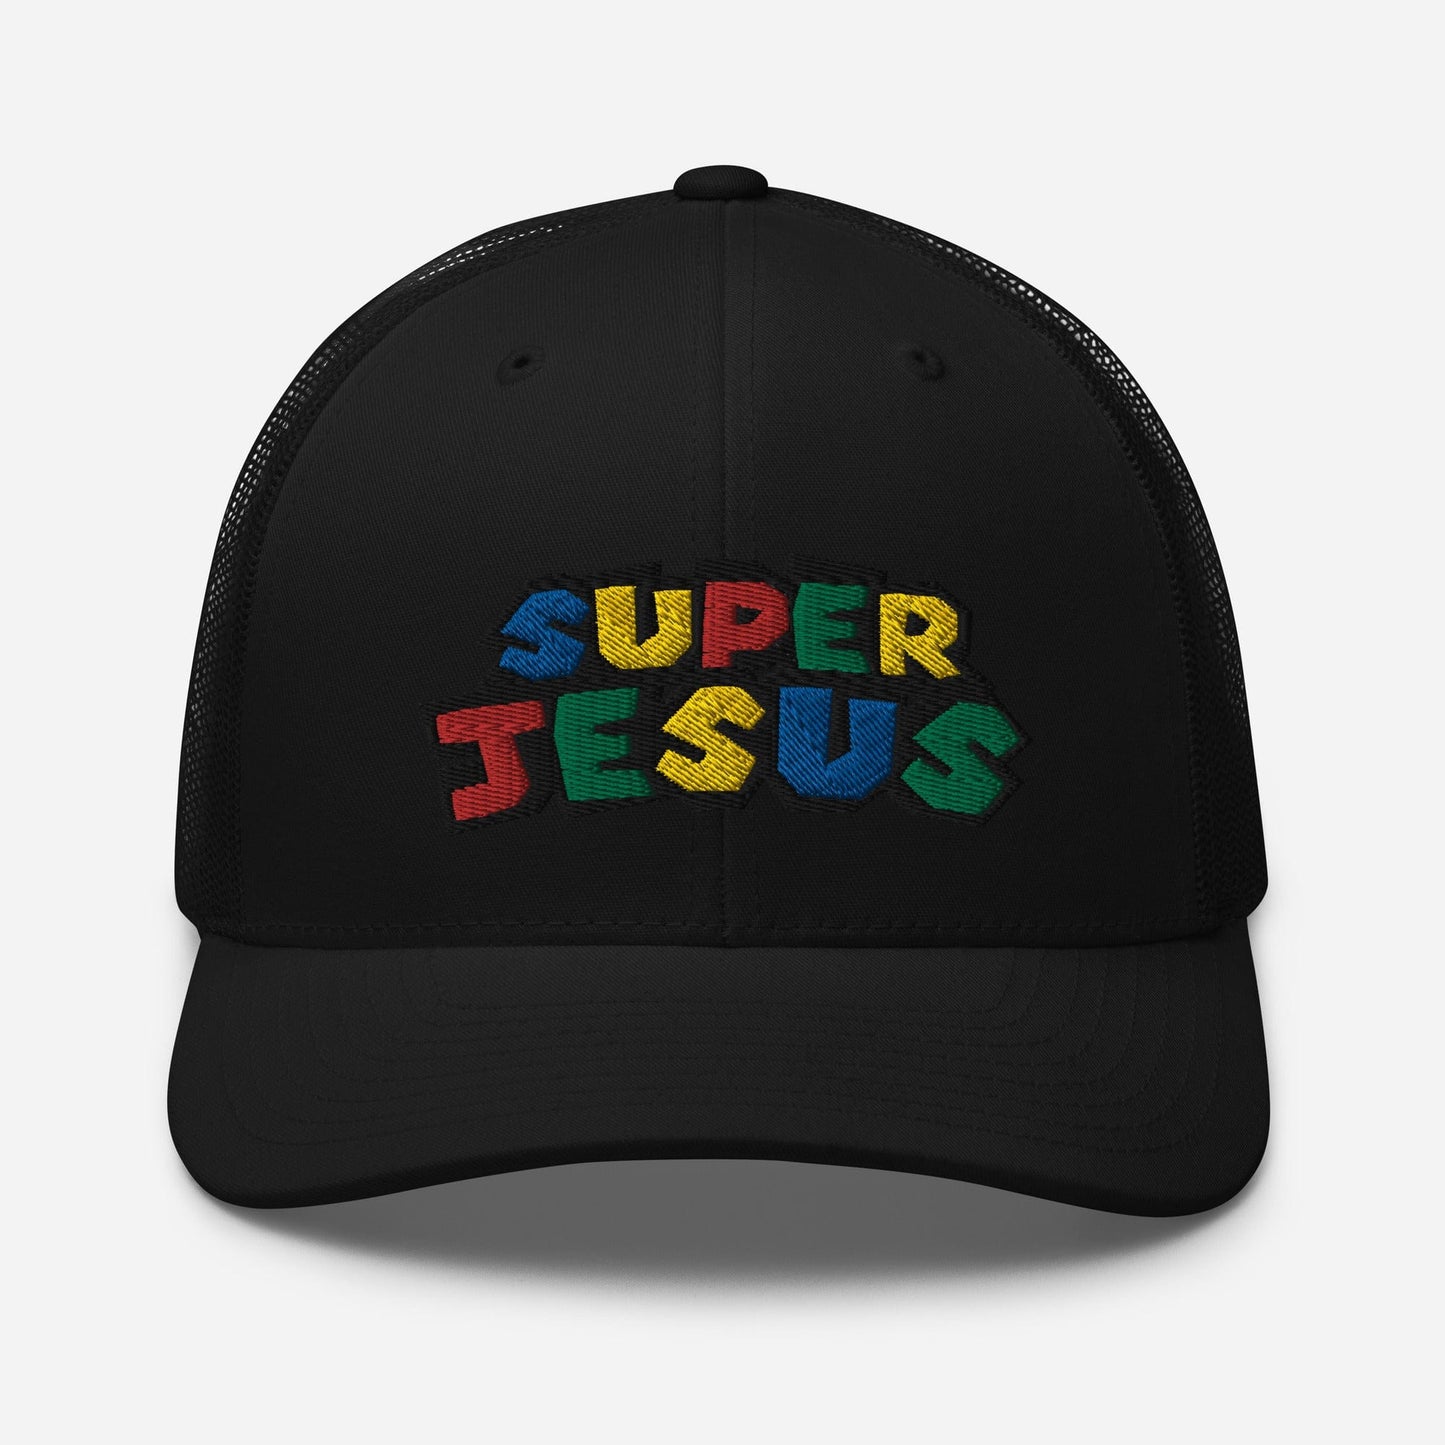 Super Jesus 3D Embroidered Trucker Cap